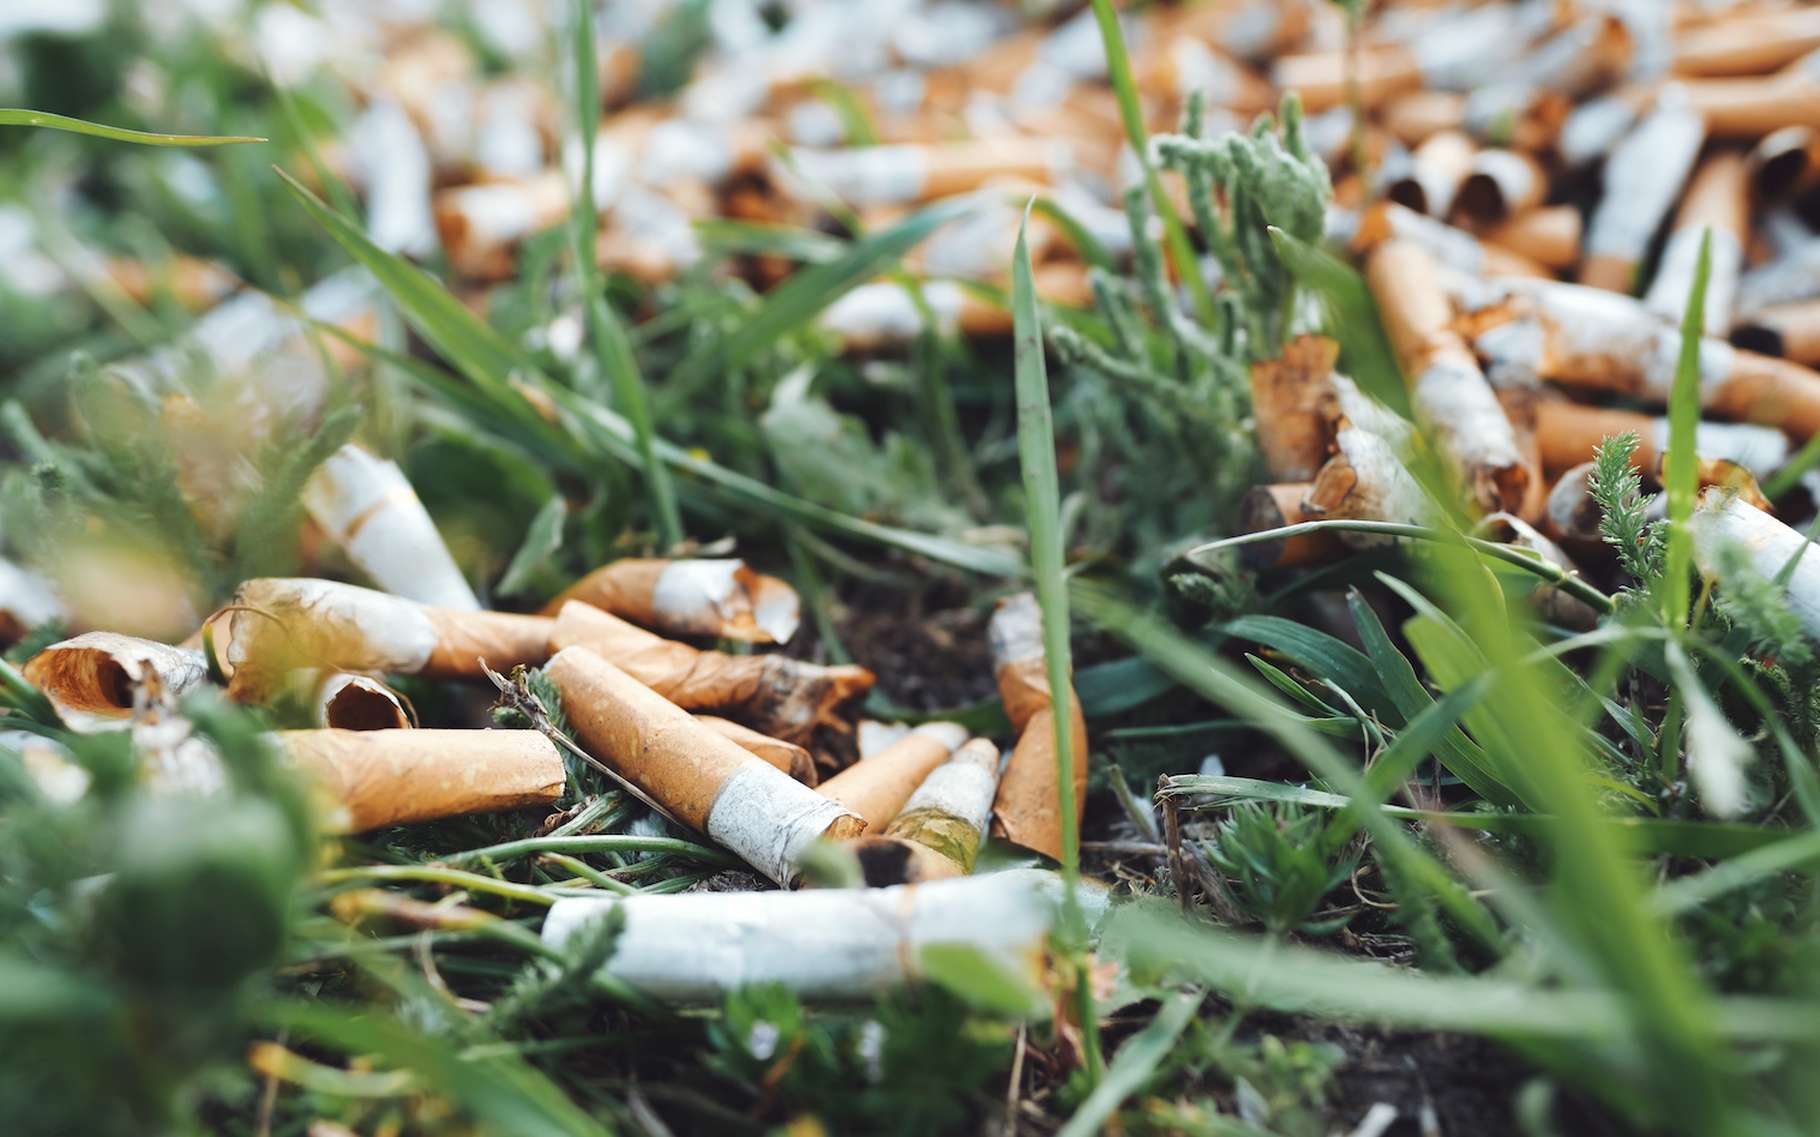 Les mégots de cigarettes libèrent des toxines mortelles dans la nature